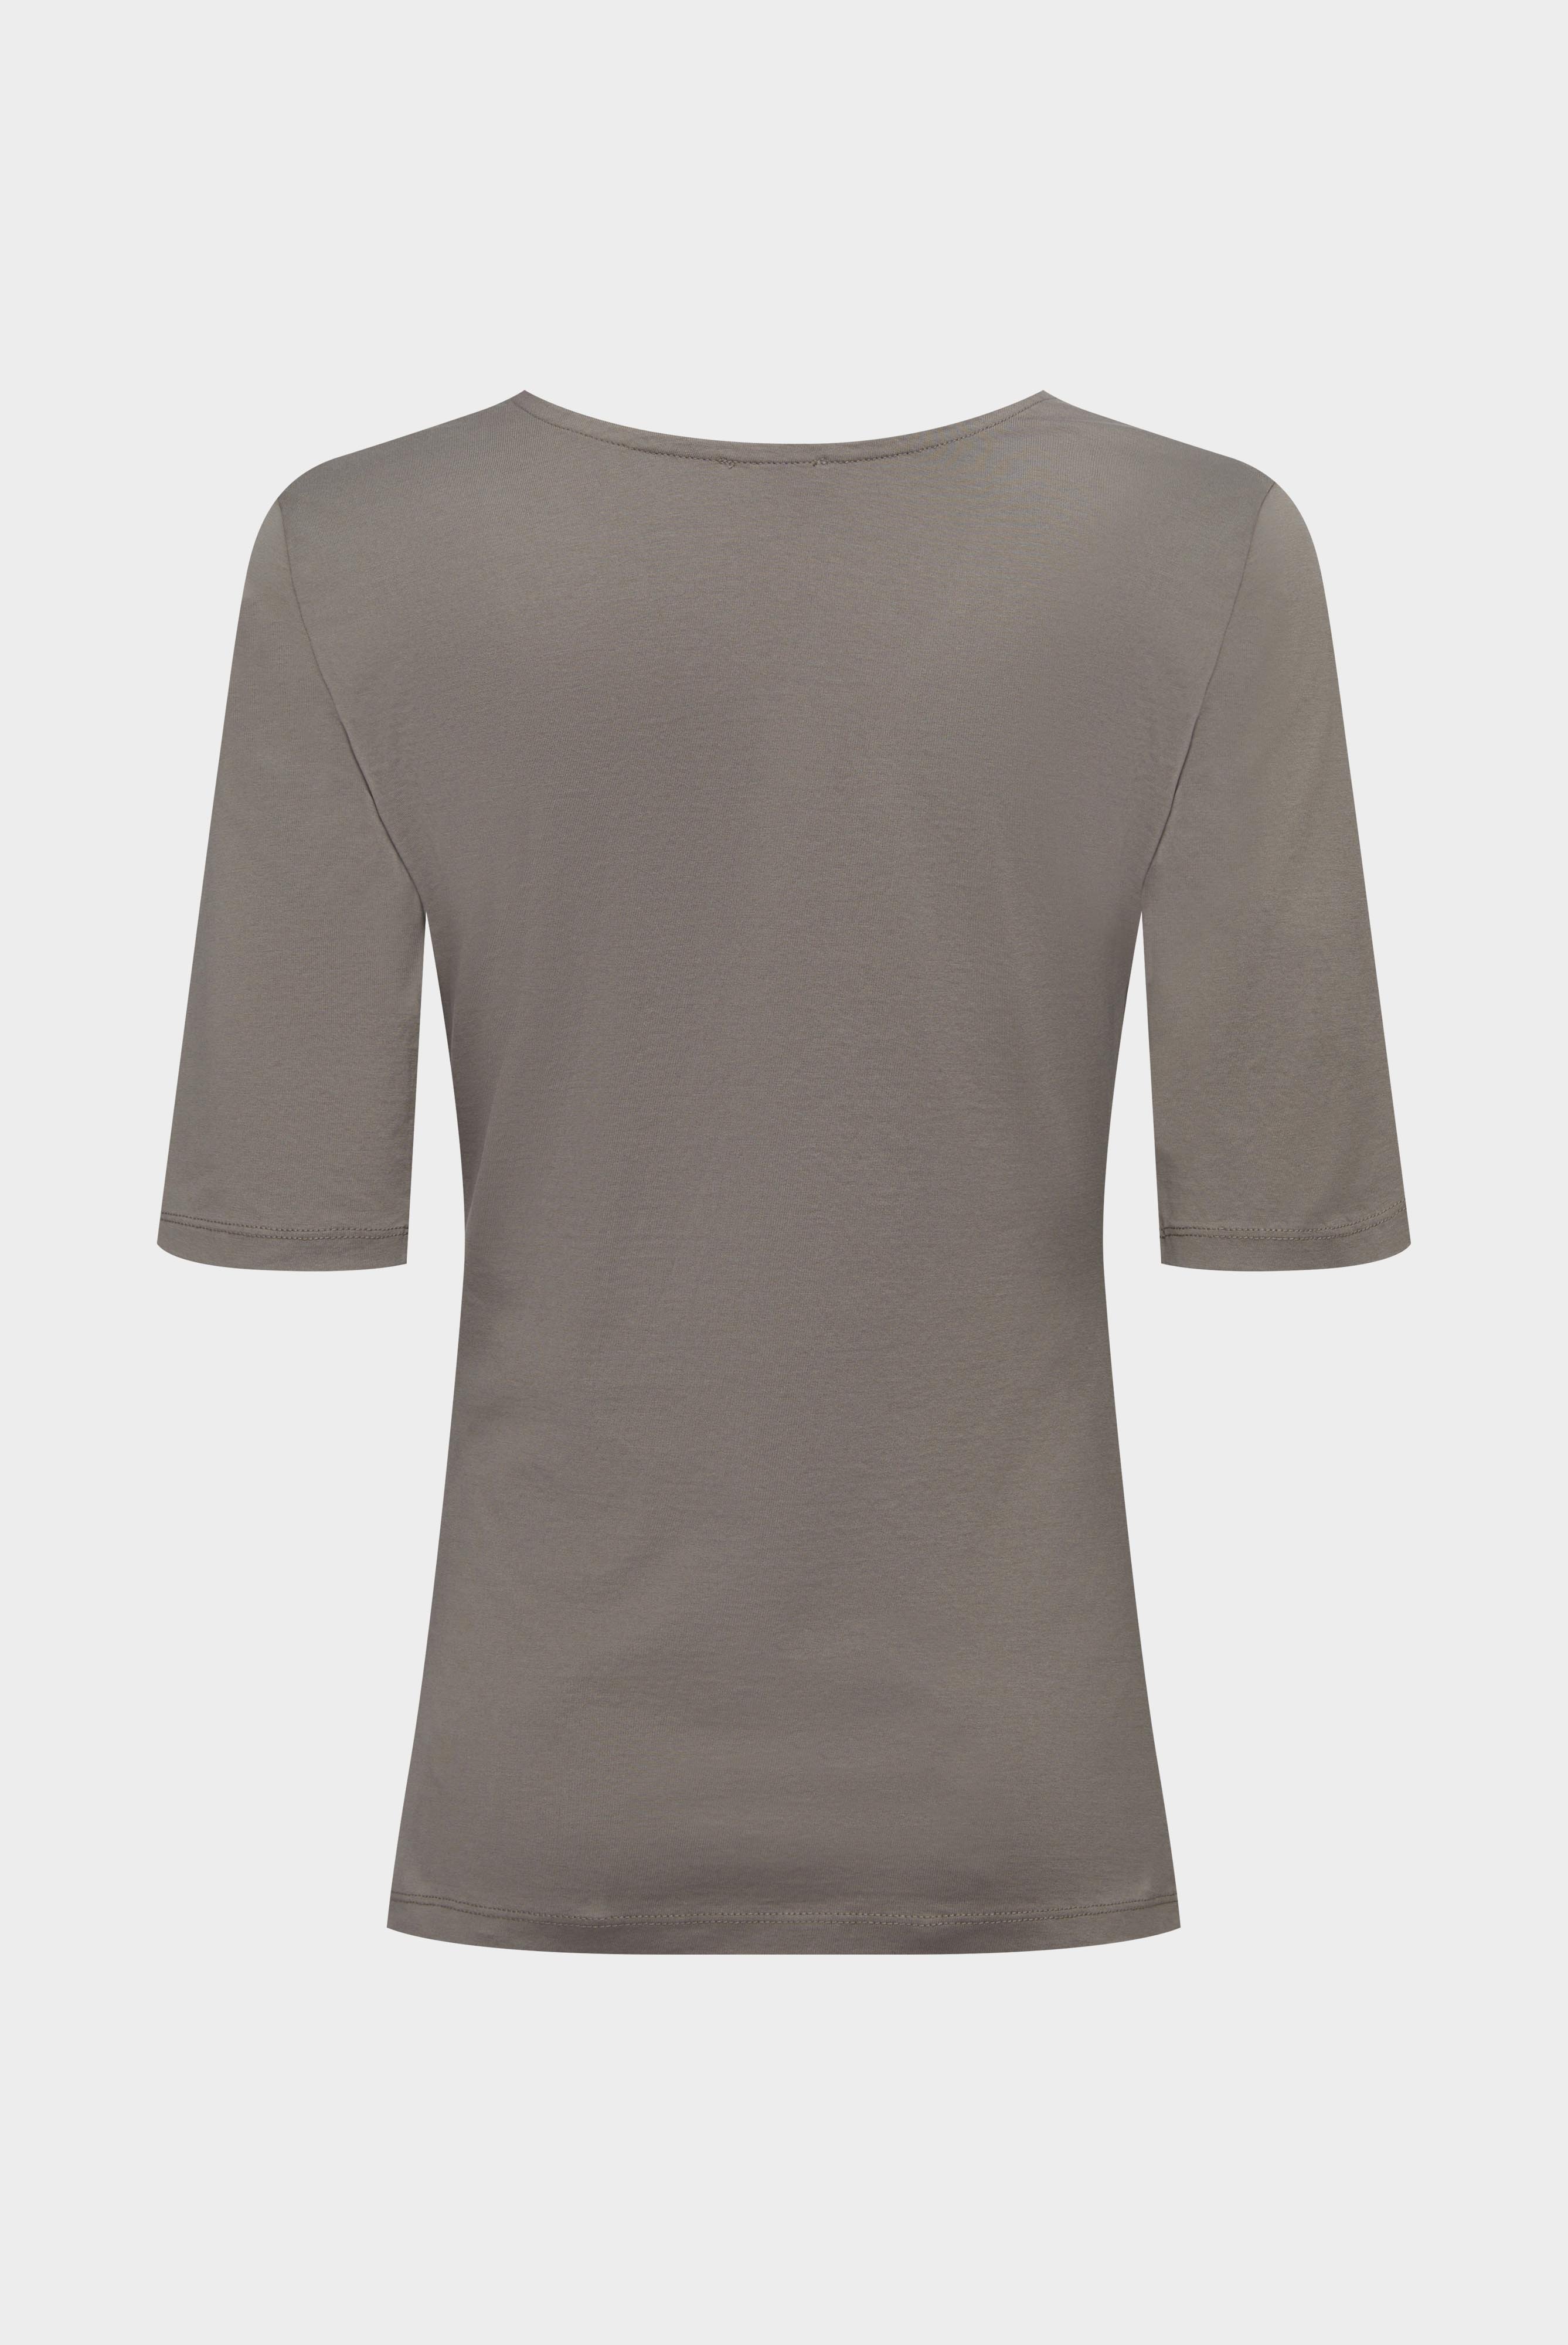 Tops & T-Shirts+Urban Jersey Wide Neck T-Shirt+05.2911..Z20044.060.XS